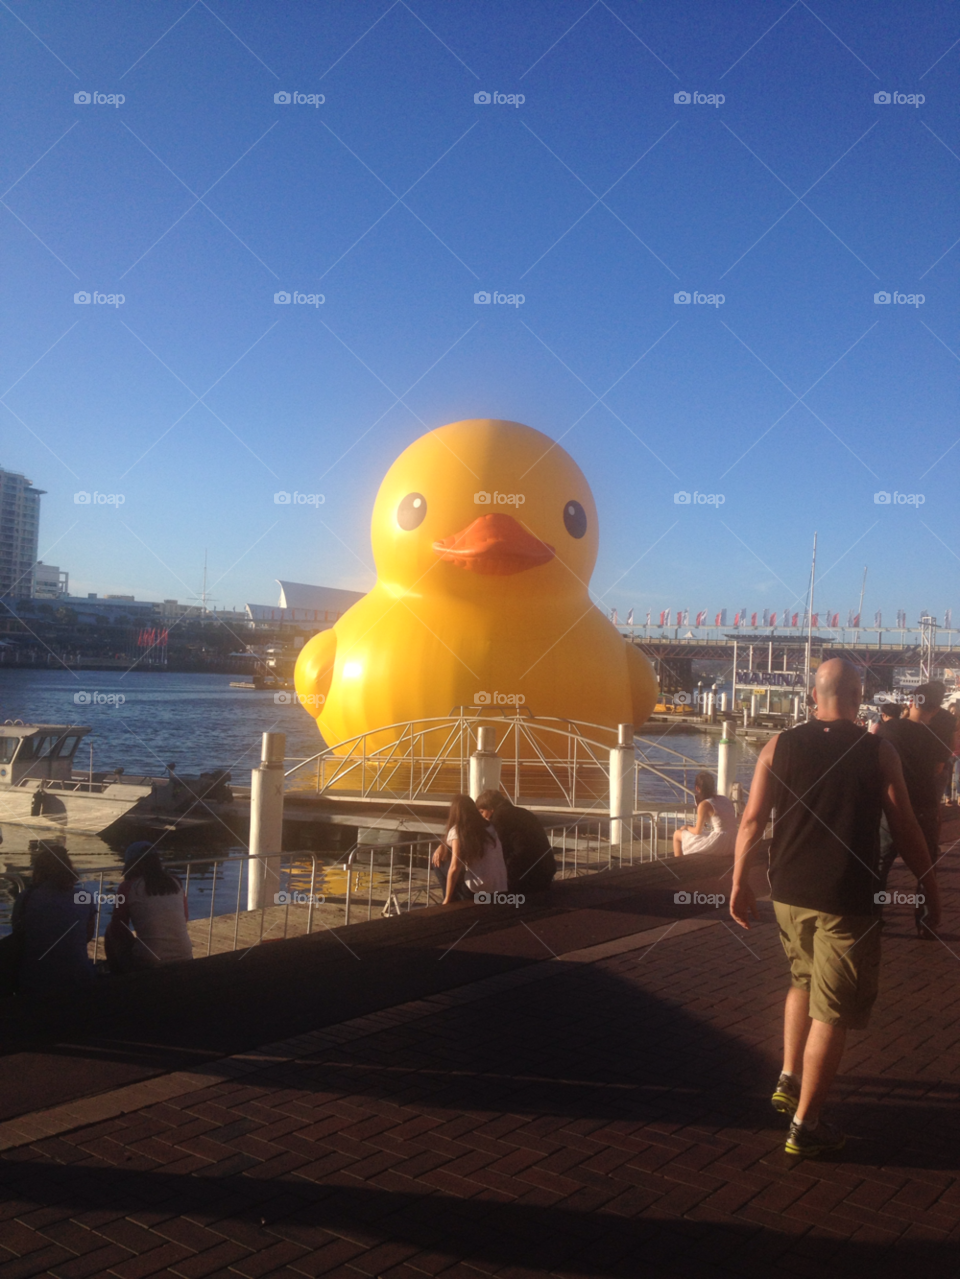 sydney darling harbour giant duck giant duck sydney by dannyzl